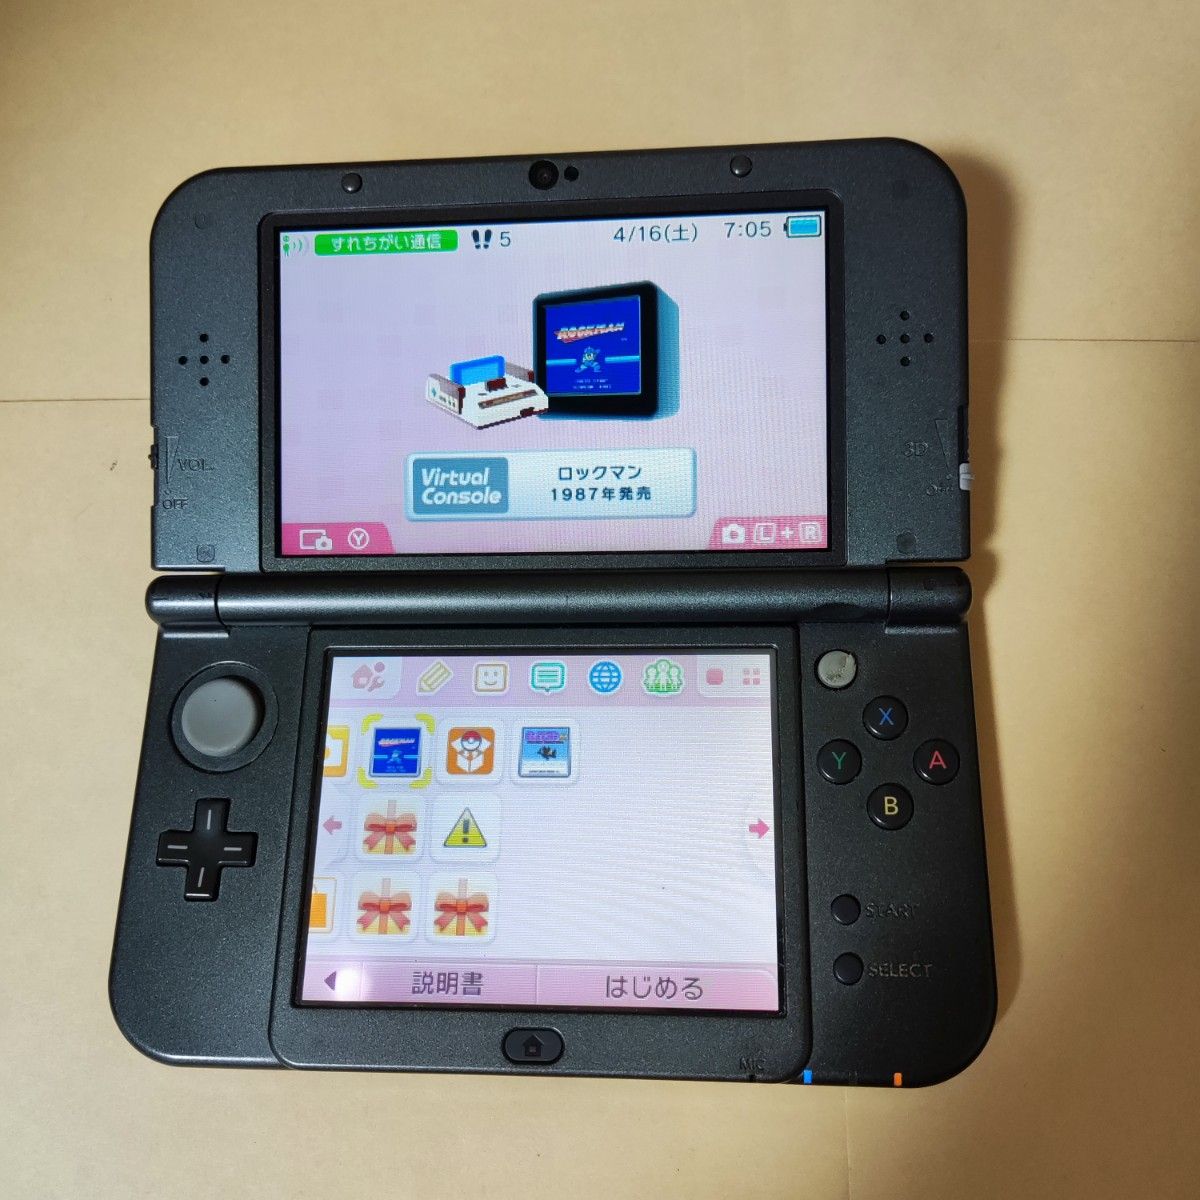 Nintendo NEW ニンテンドー 3DS LL ブラック ジャンク品-